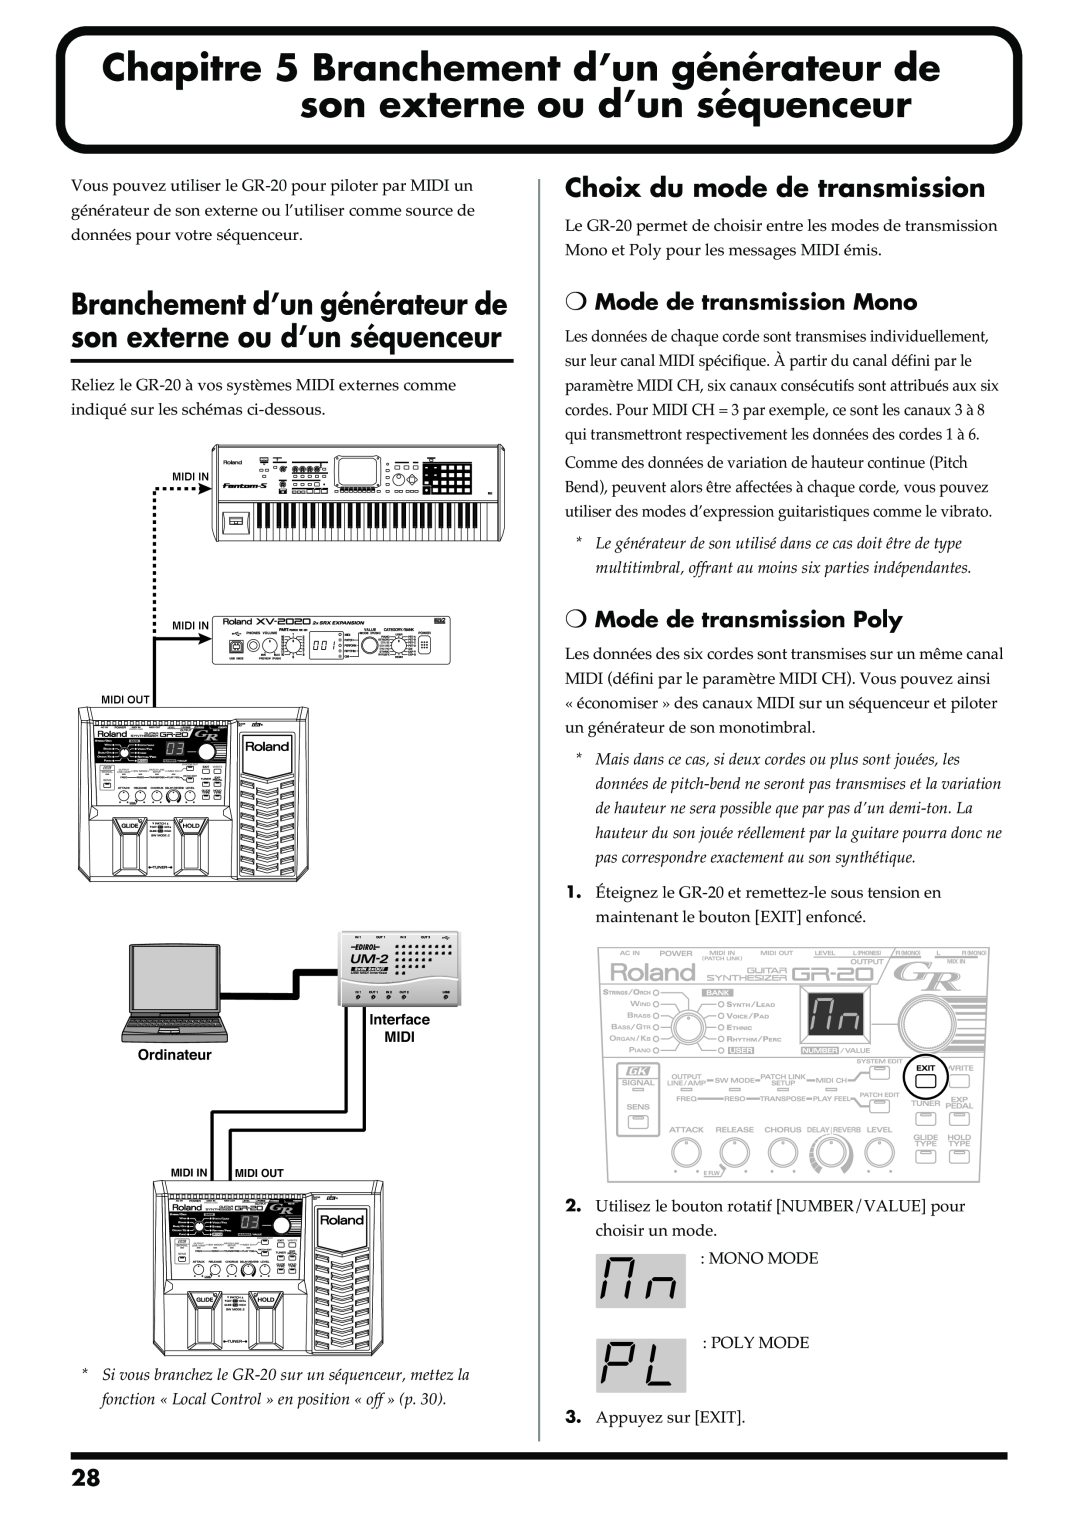 Roland GR-20 manual Choix du mode de transmission, Mode de transmission Mono, Mode de transmission Poly 